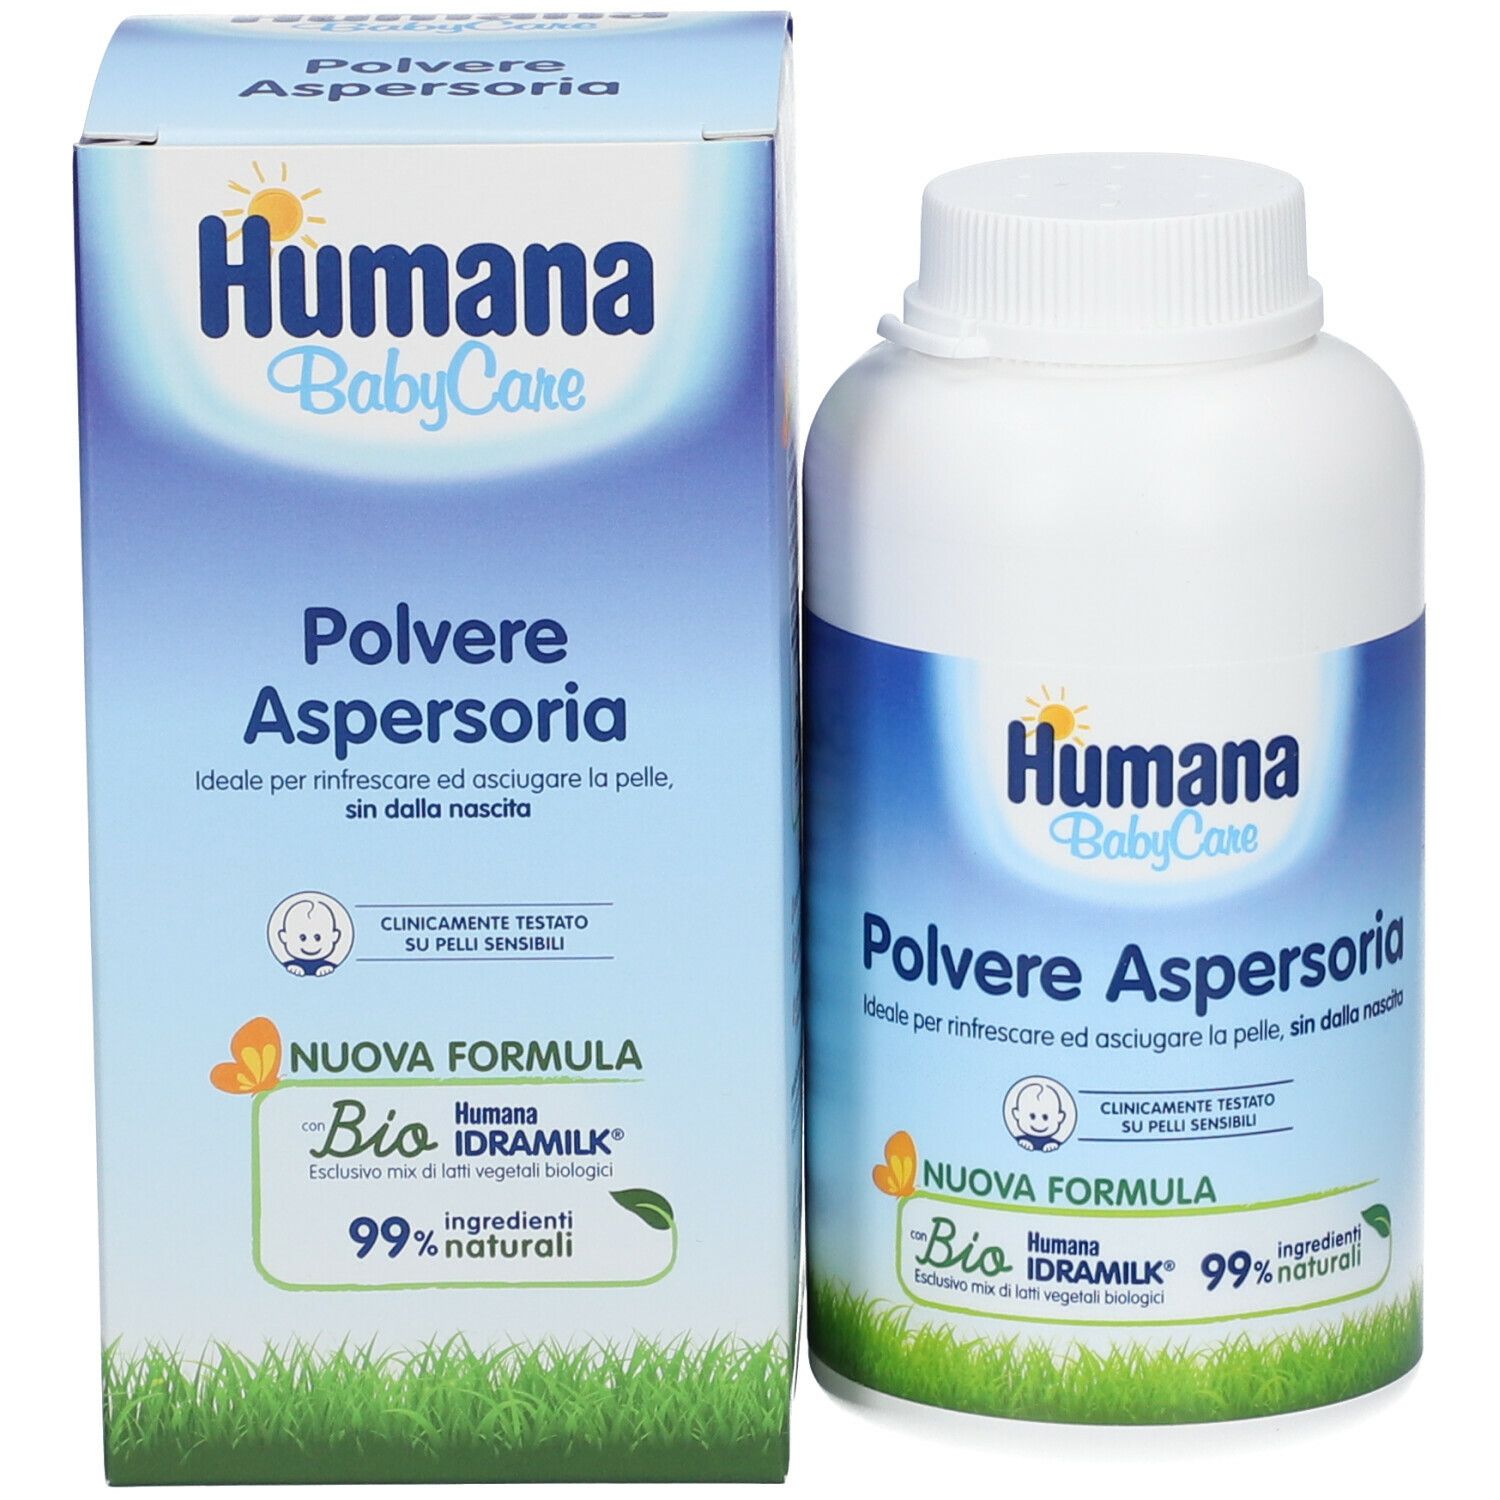 Humana Baby Polvere Aspersoria